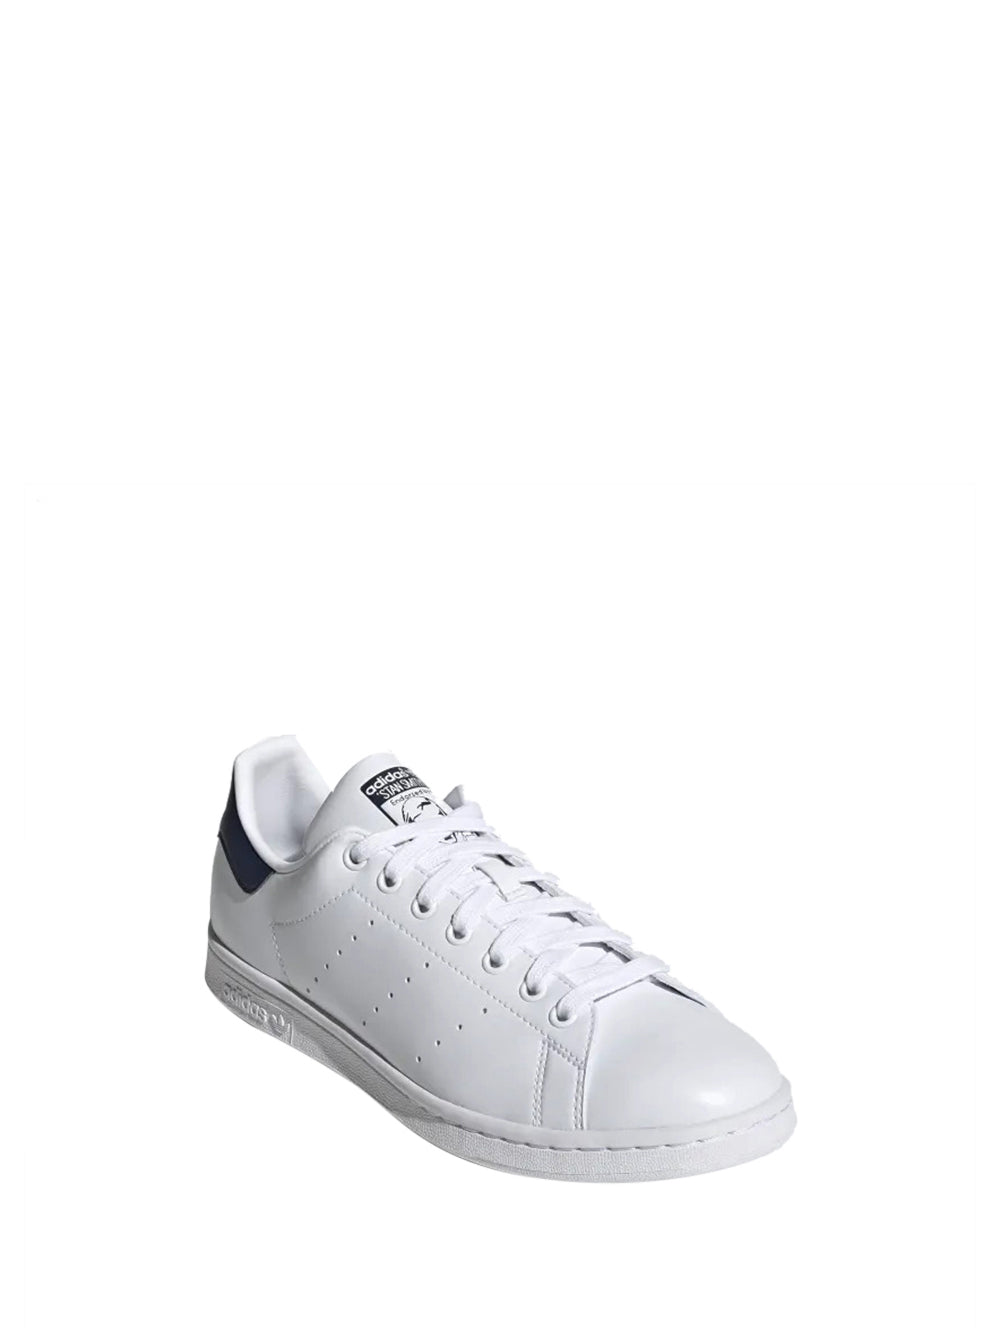 ADIDAS Sneakers Uomo Bianco/blu in ecopelle con tallone a contrasto Bianco/blu